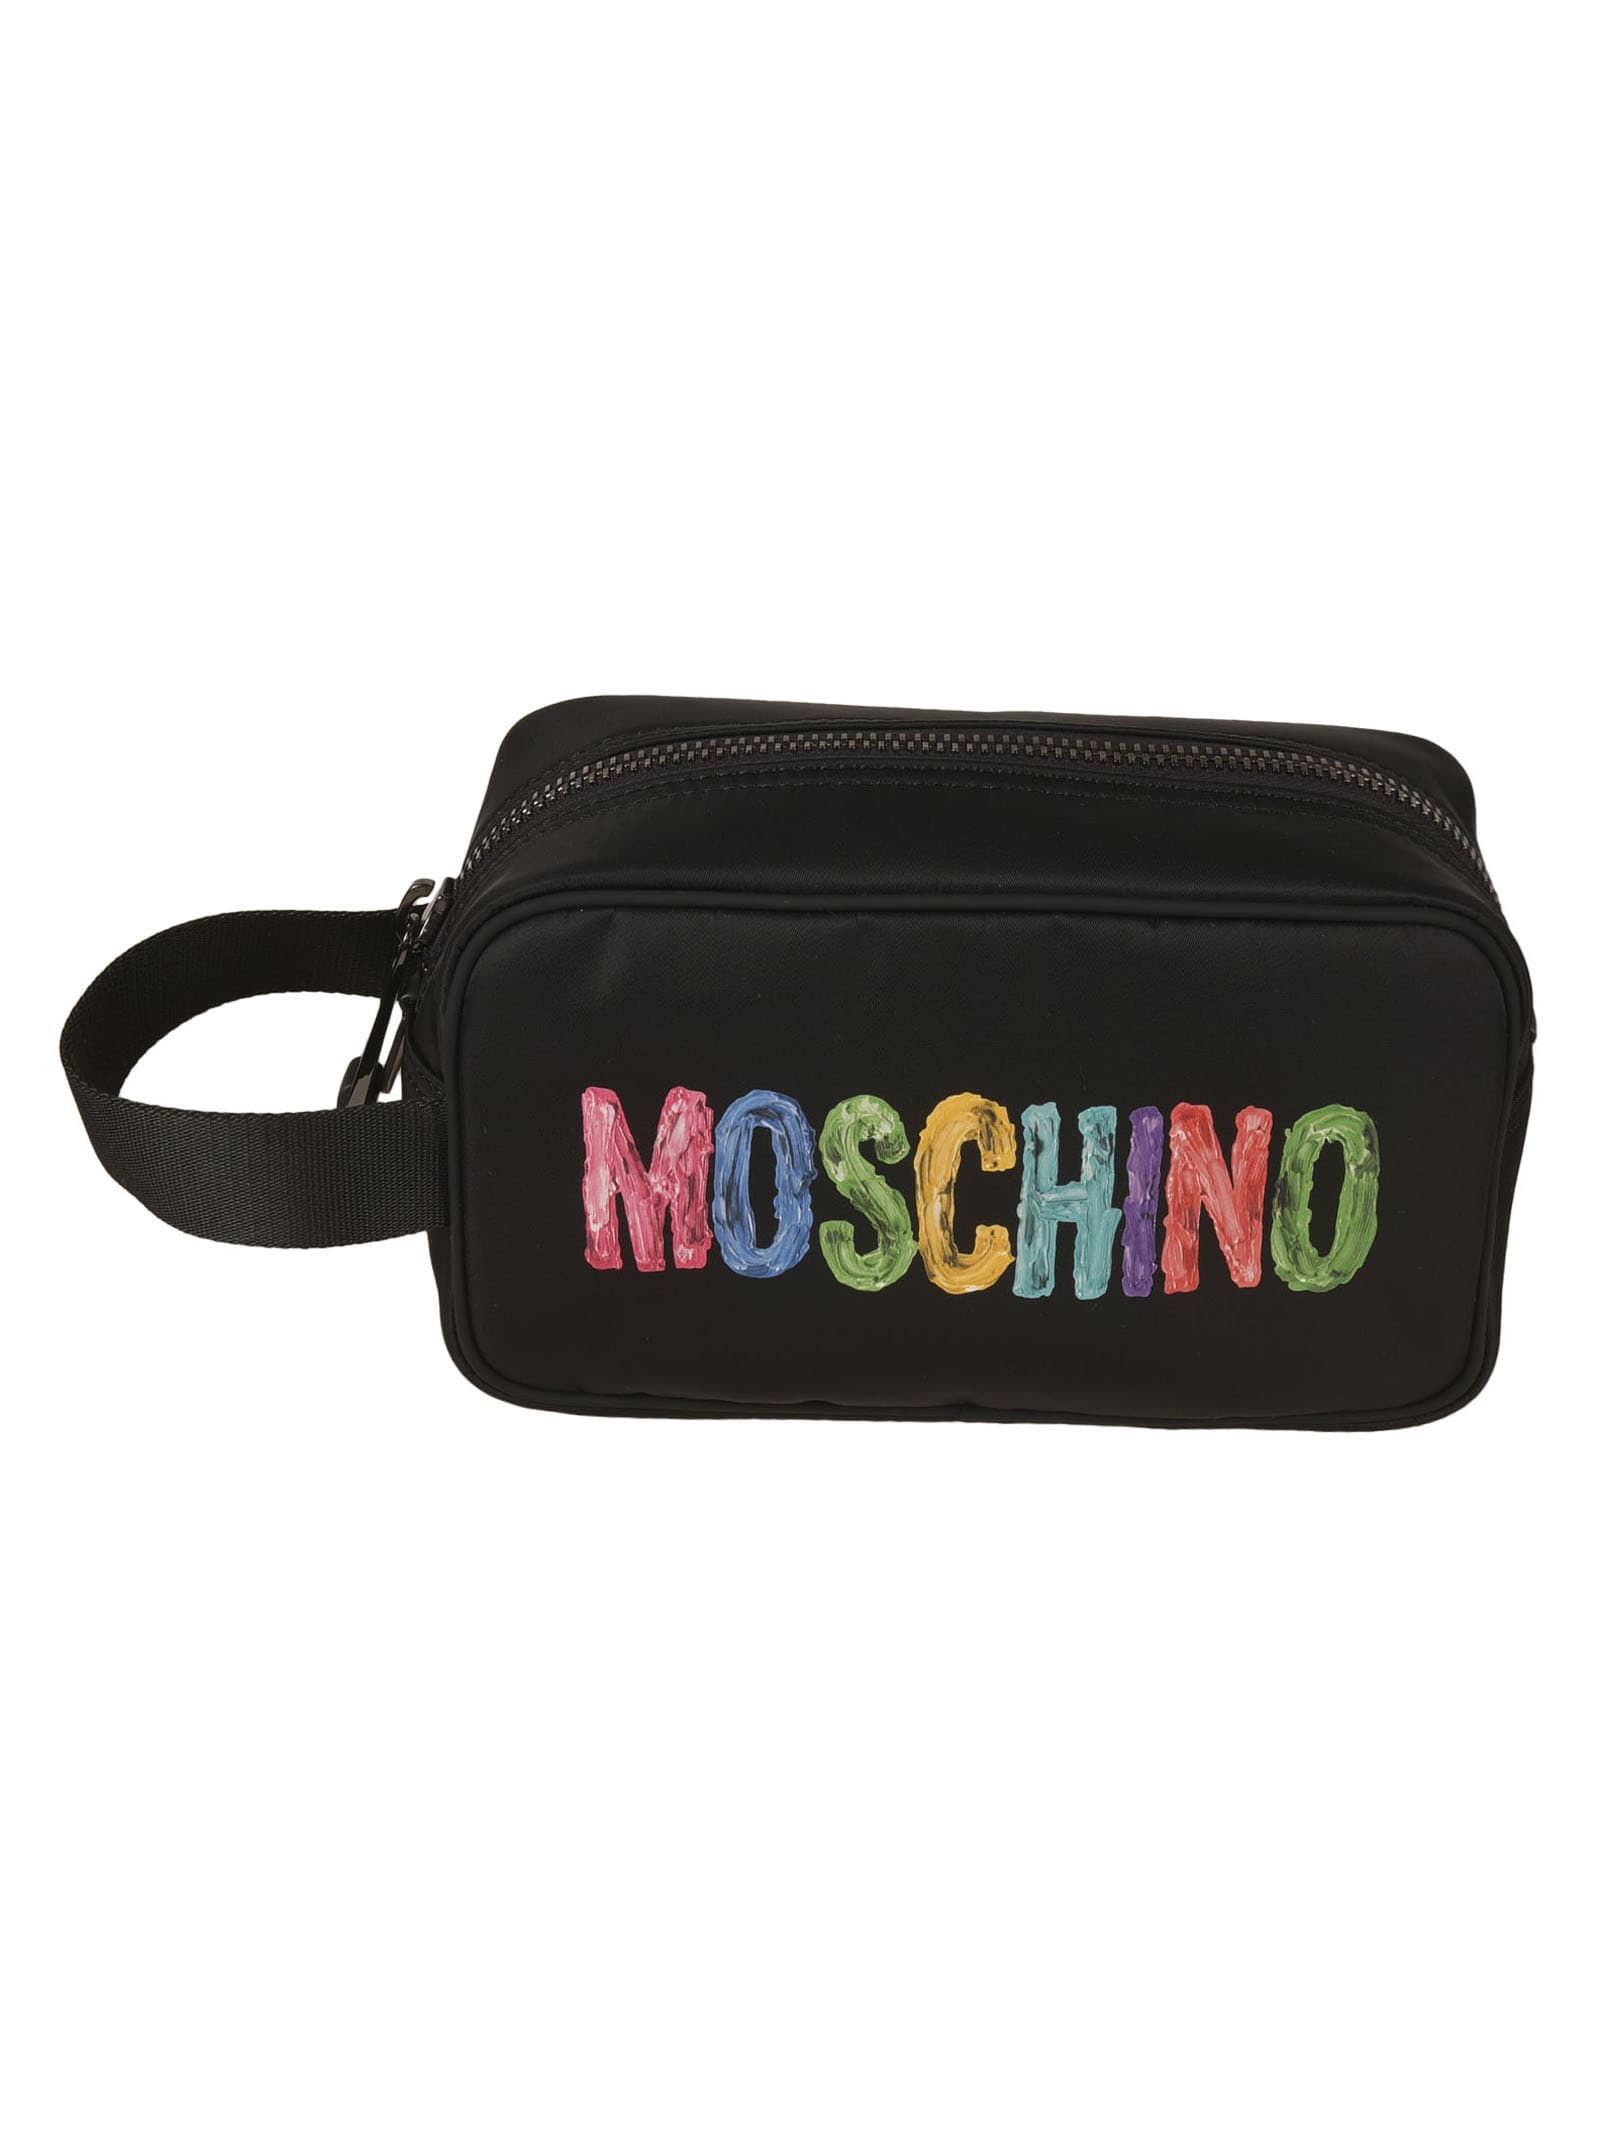 Moschino Multicolored Logo Print Wash Bag